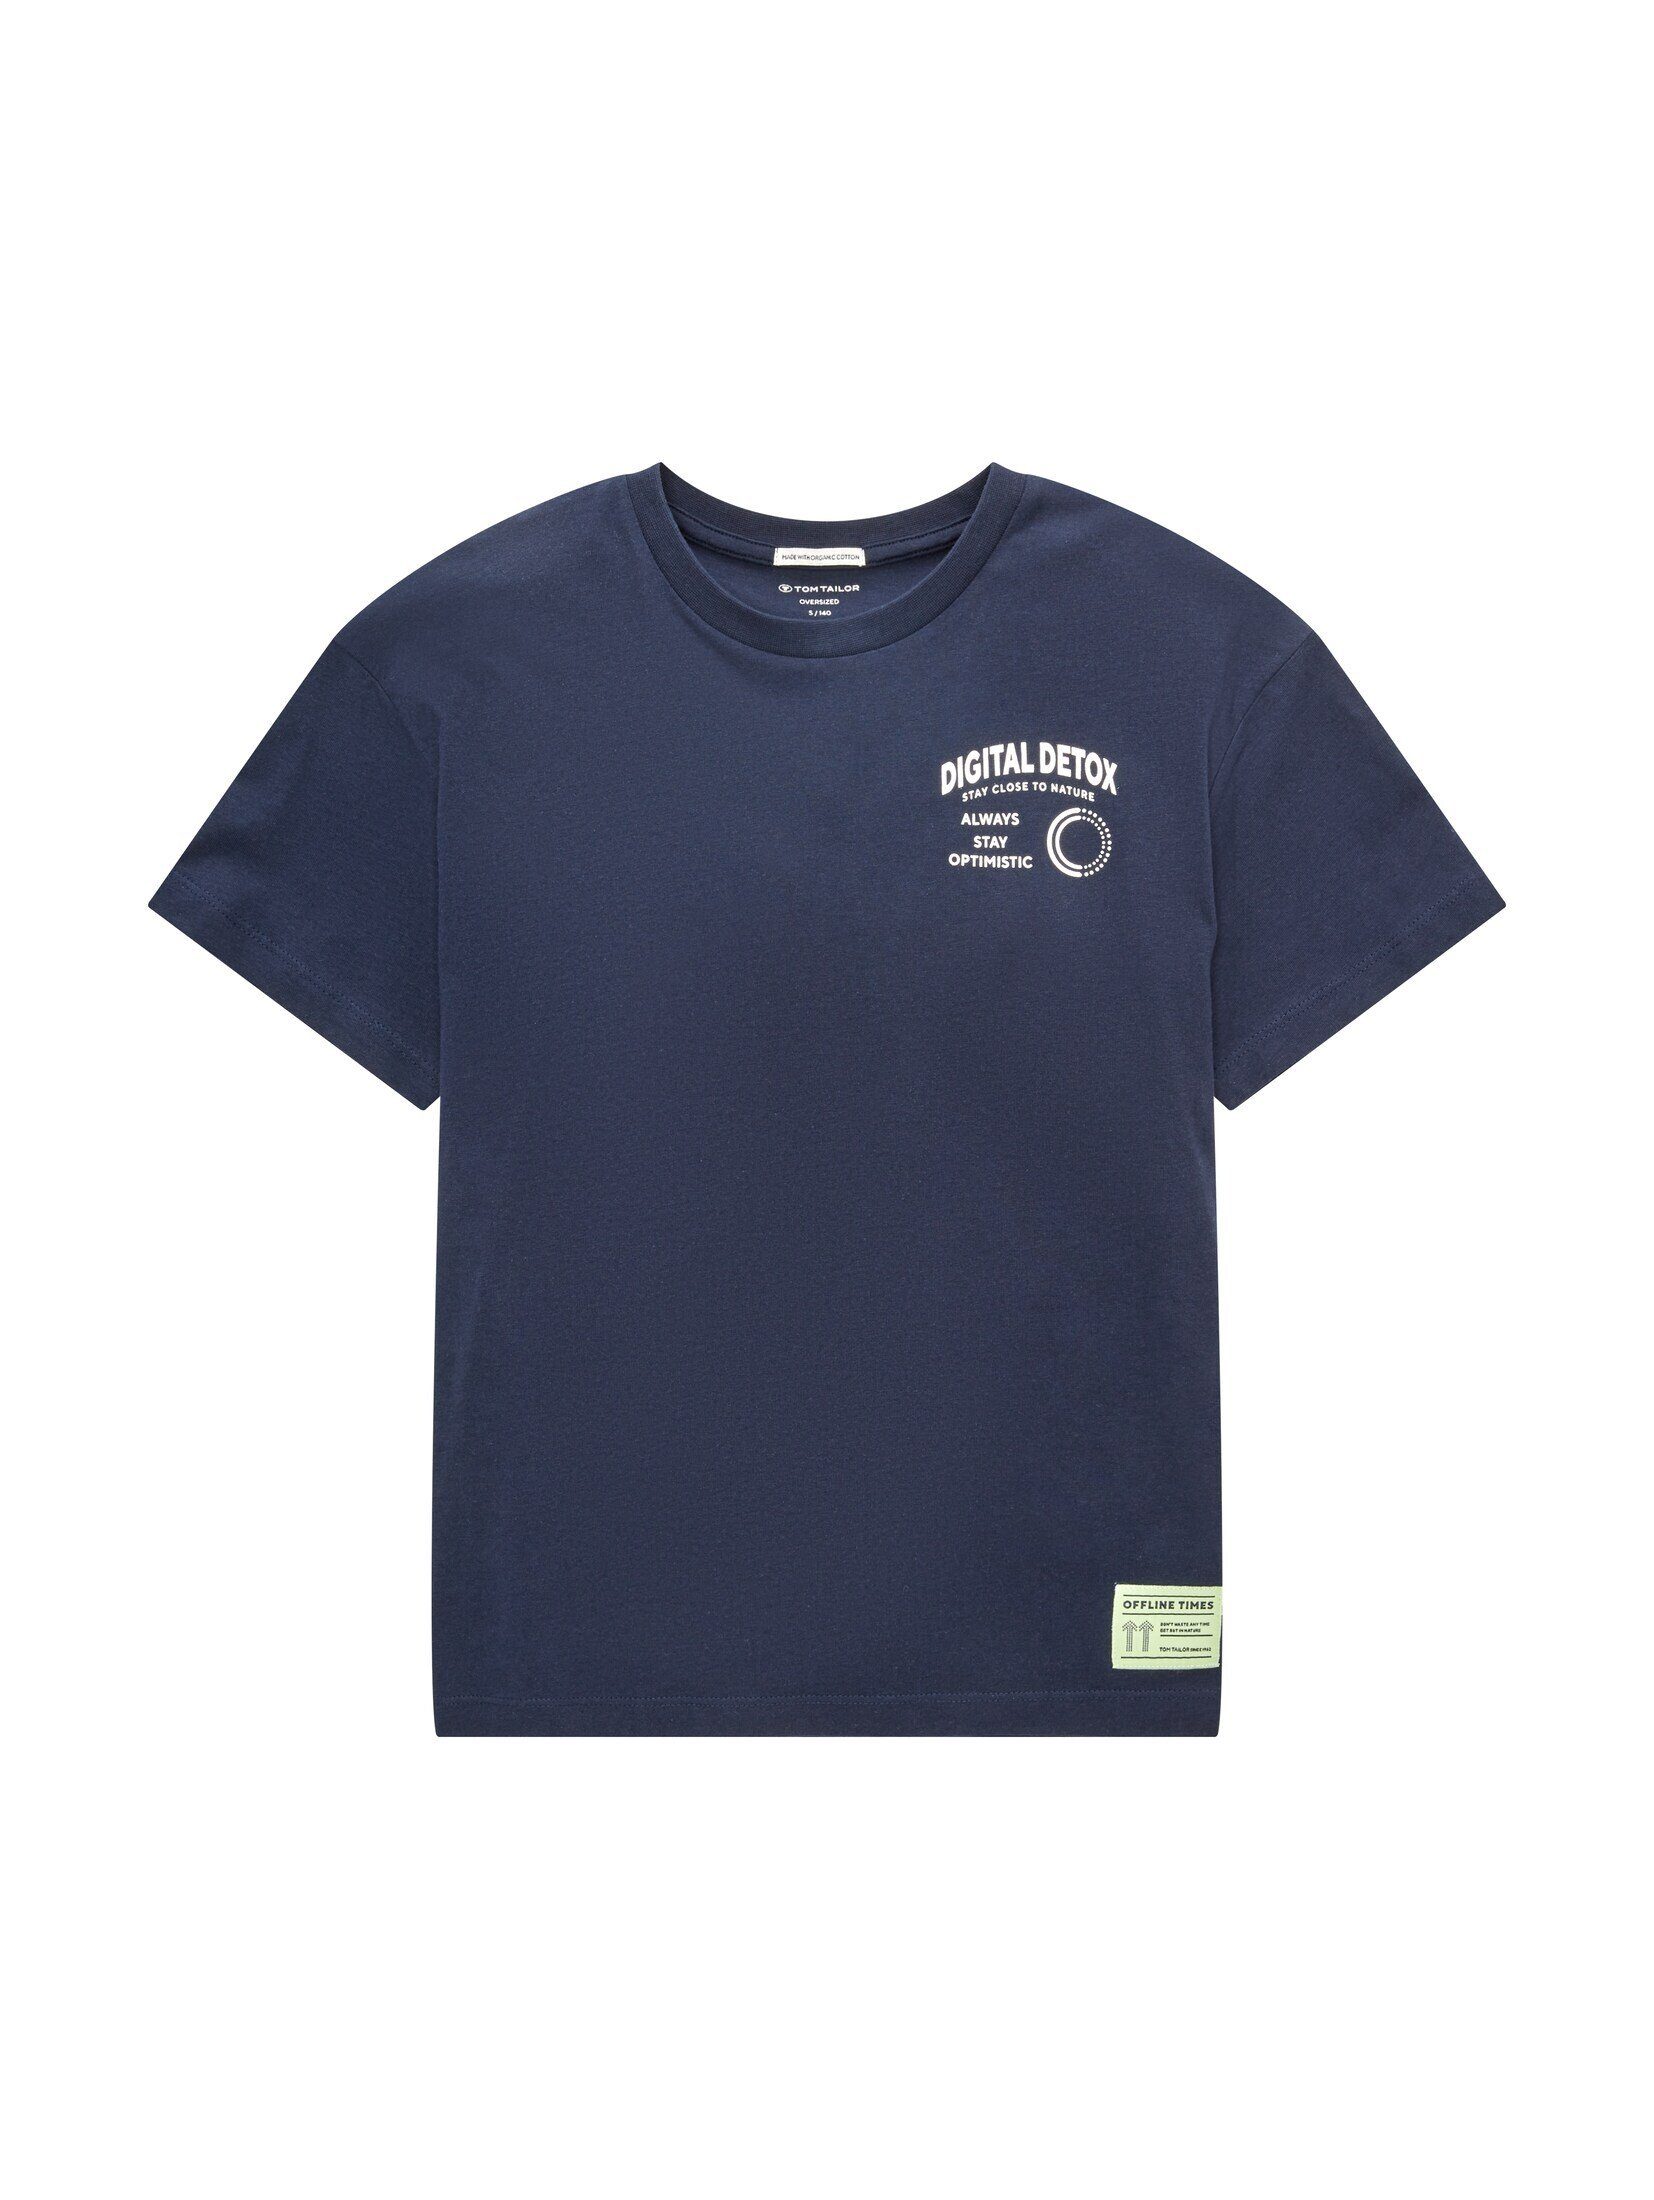 mit T-Shirt blue sky Textprint T-Shirt TAILOR TOM captain